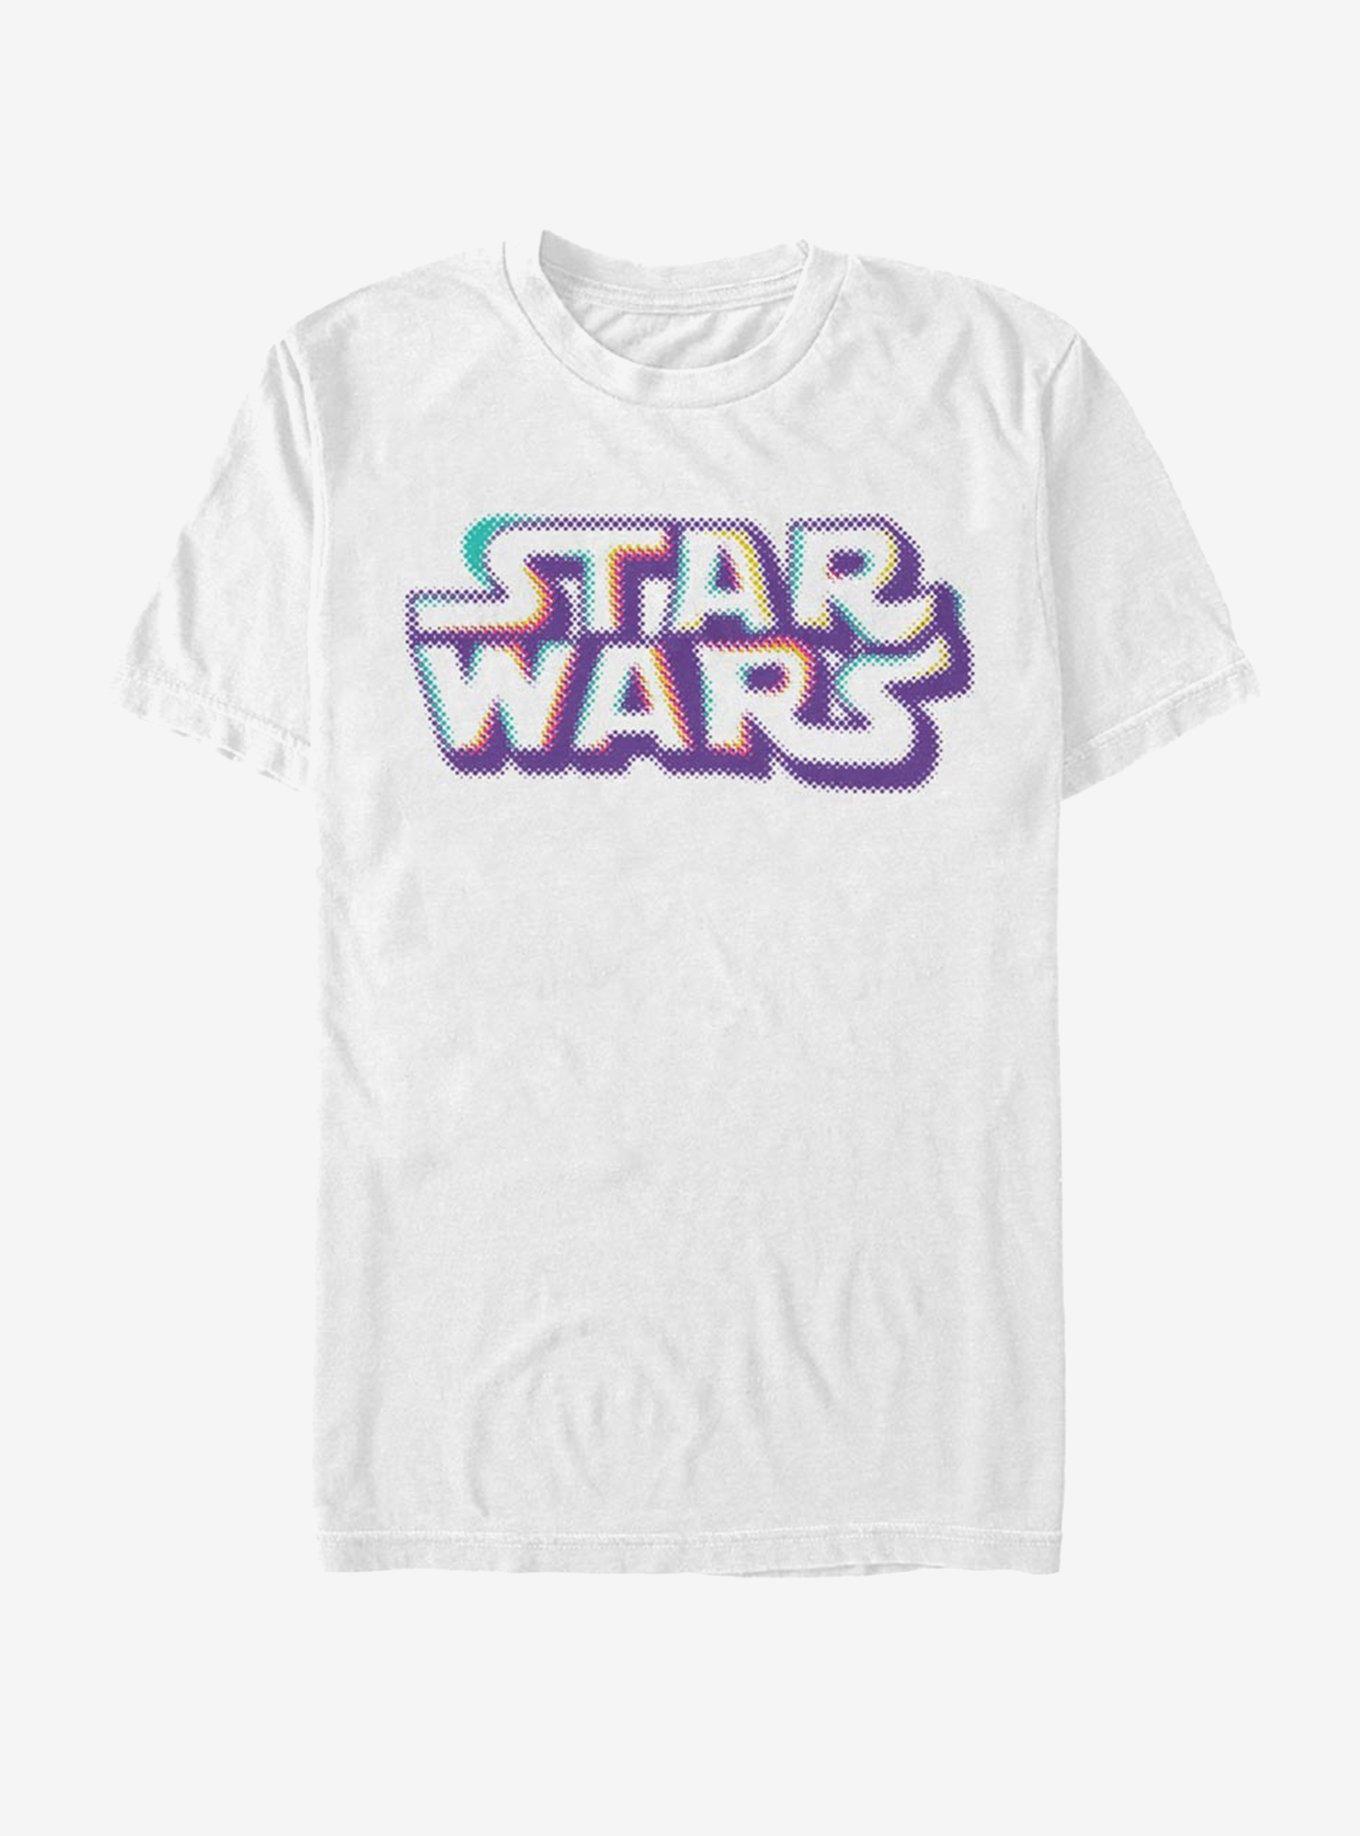 Star Wars Thermal Logo Dotty T-Shirt, WHITE, hi-res